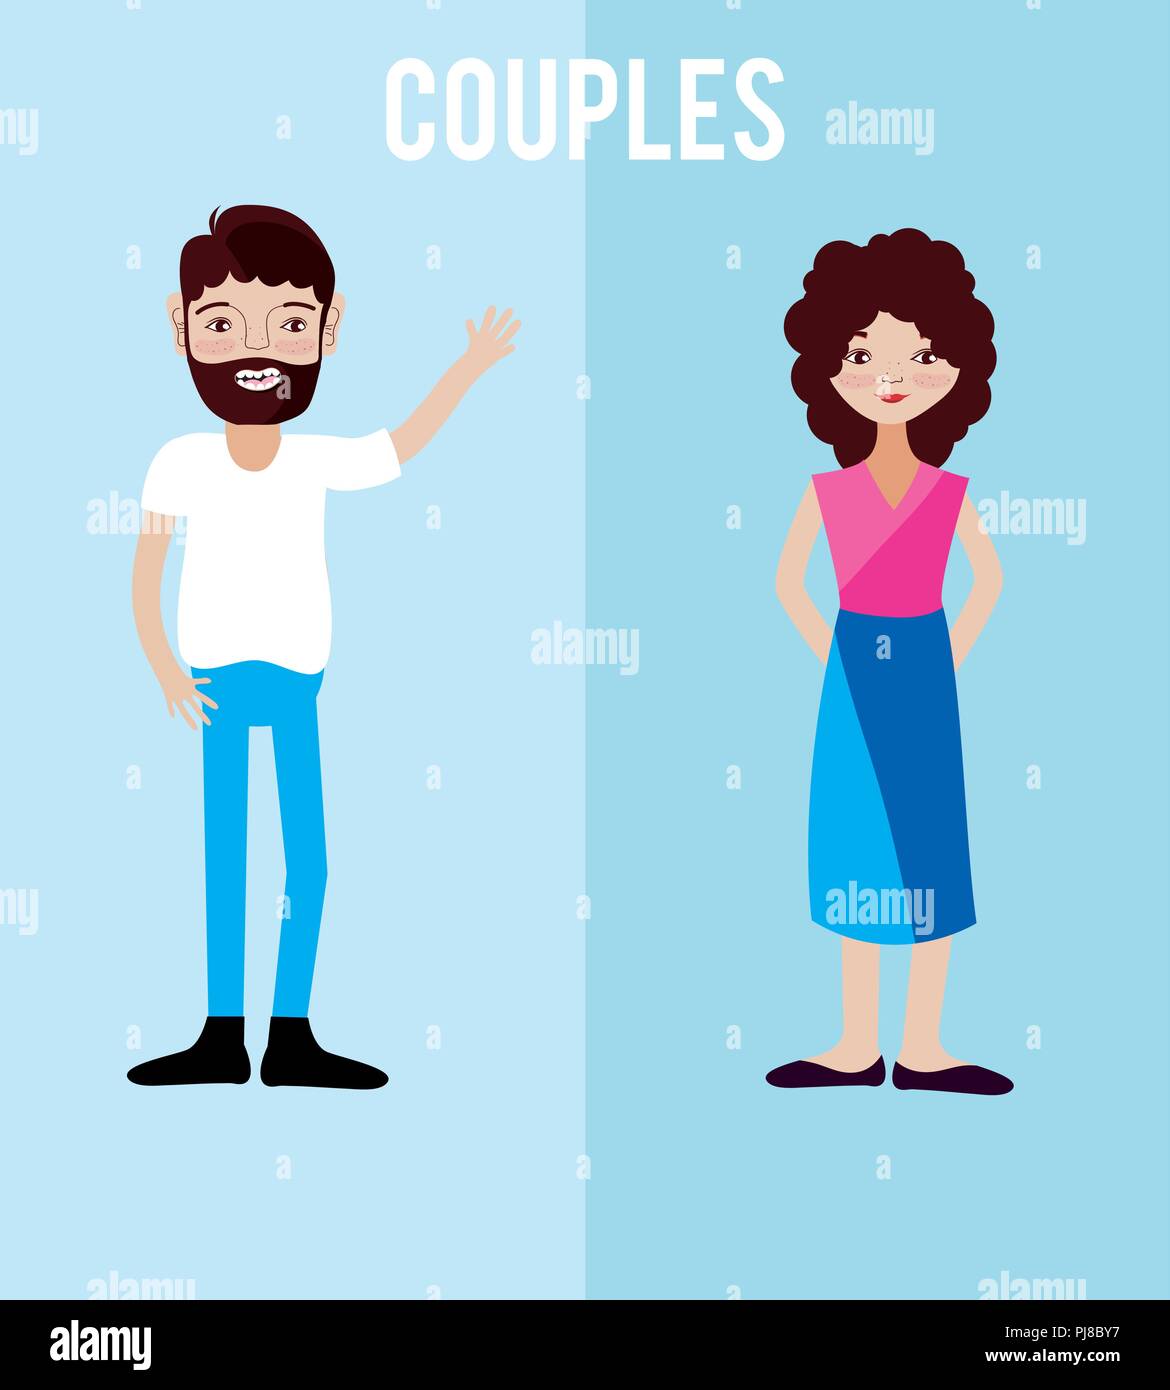 Cute couples cartoons Stock Vector